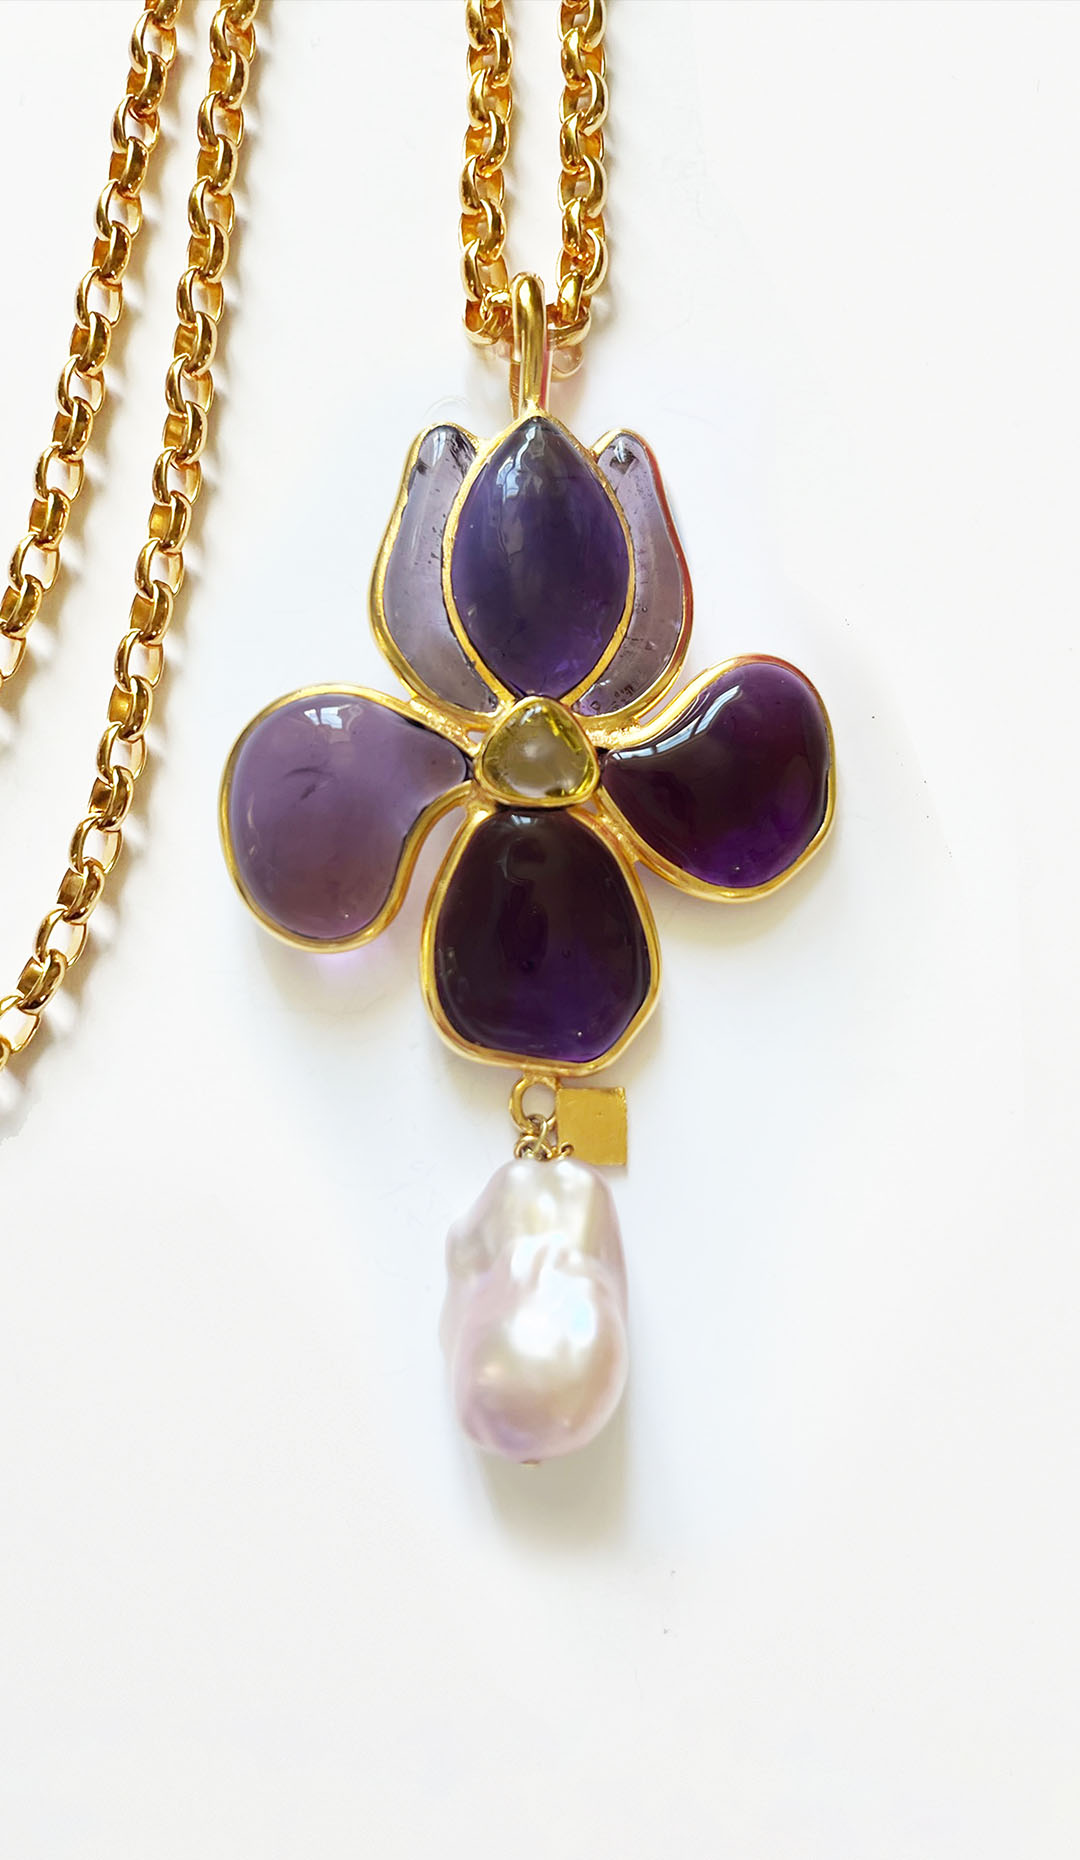 Iris Pearl Pendant on a Chain